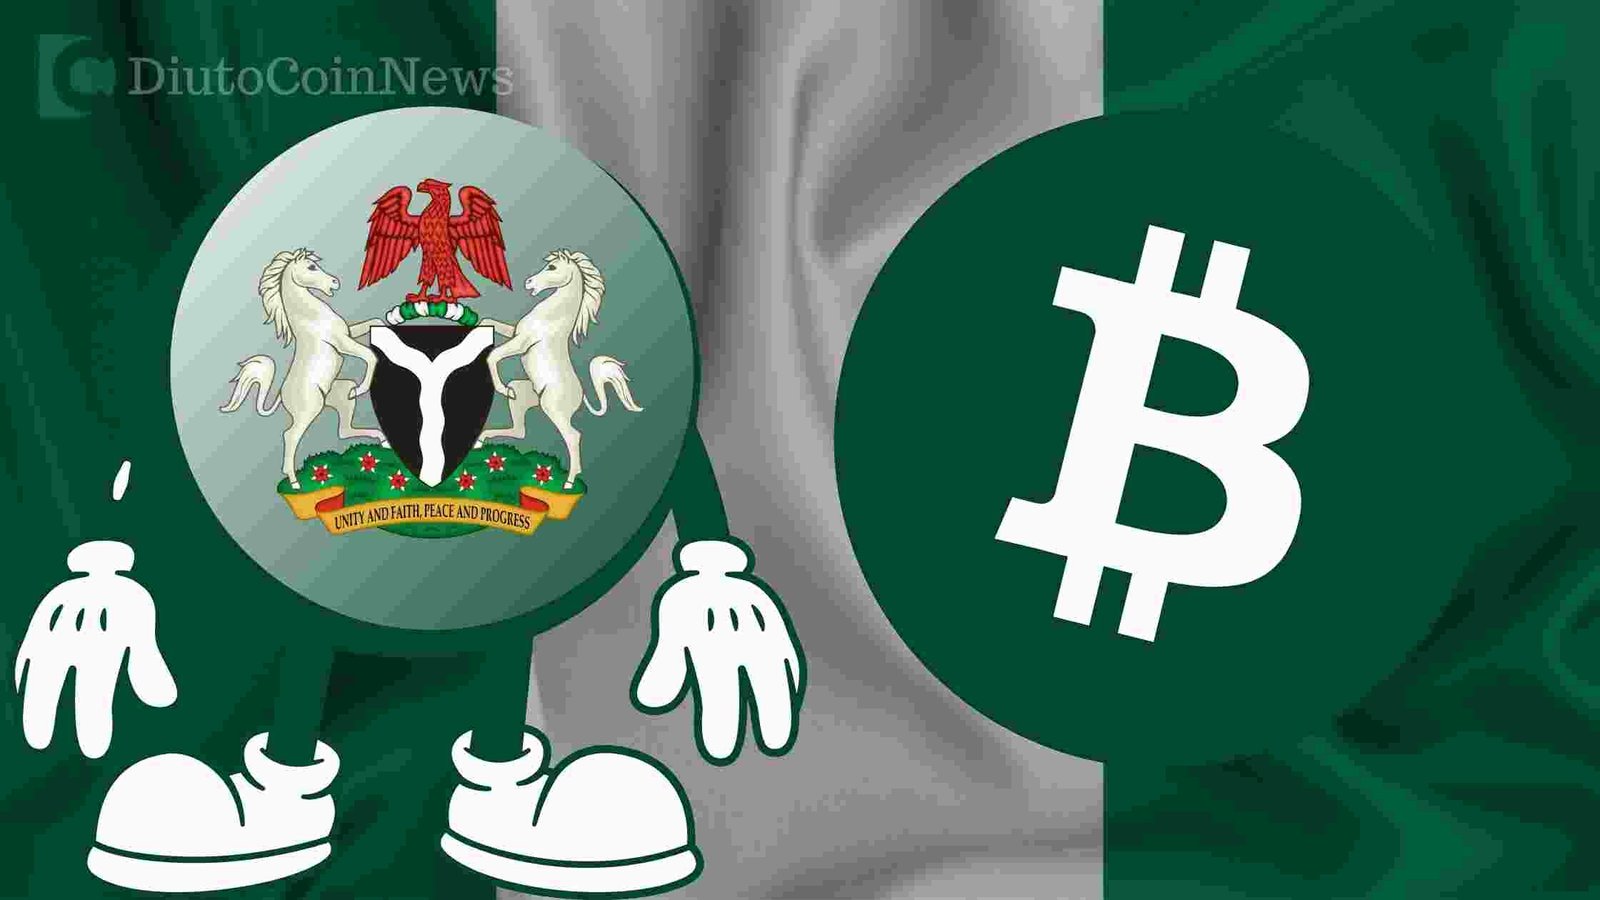 Nigeria In Talks With Binance To Establish Crypto Economic Zone.